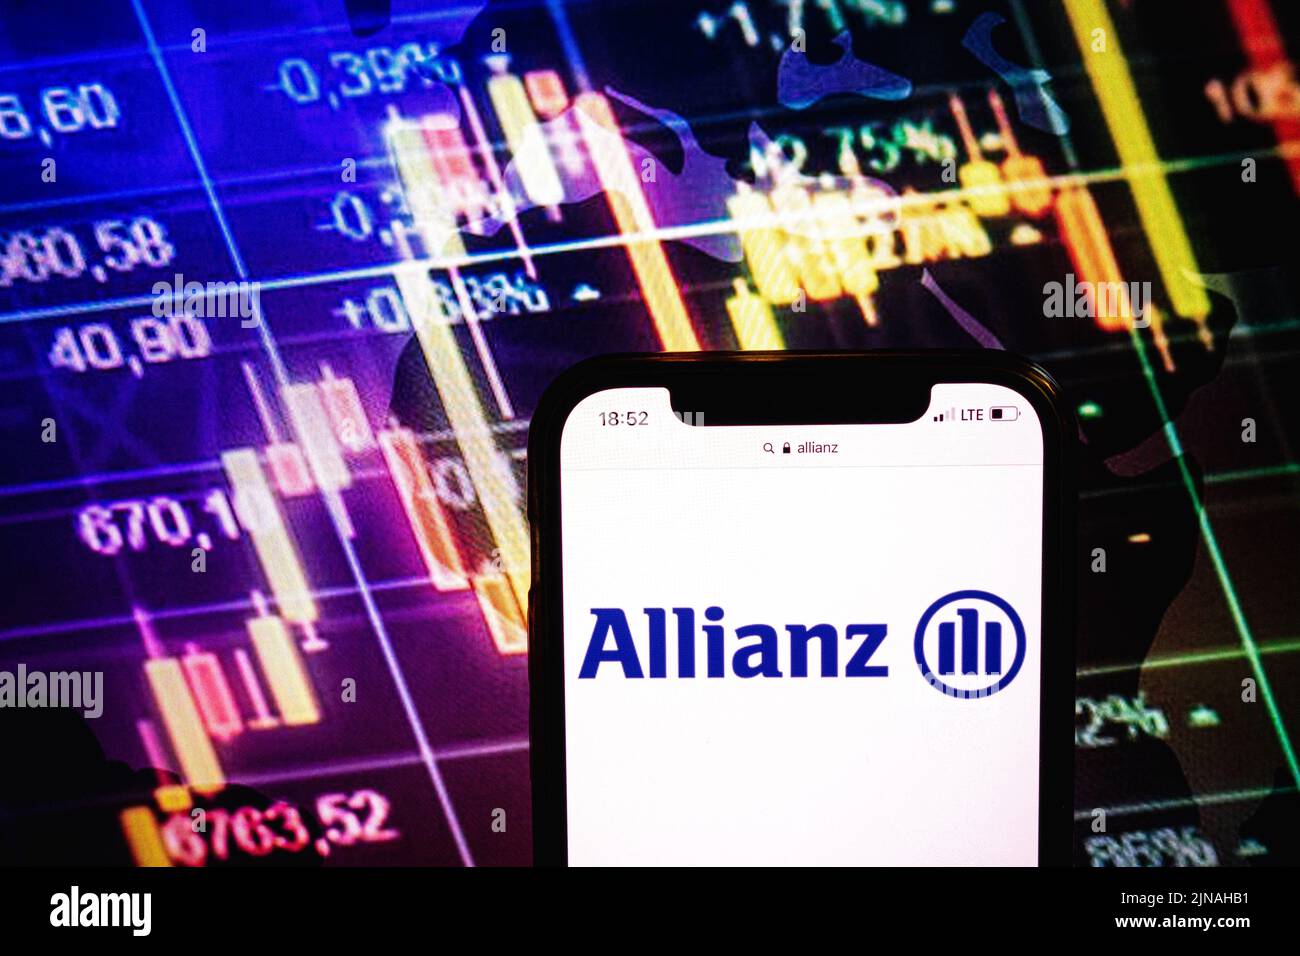 KONSKIE, POLAND - August 09, 2022: Smartphone displaying logo of Allianz company on stock exchange diagram background Stock Photo